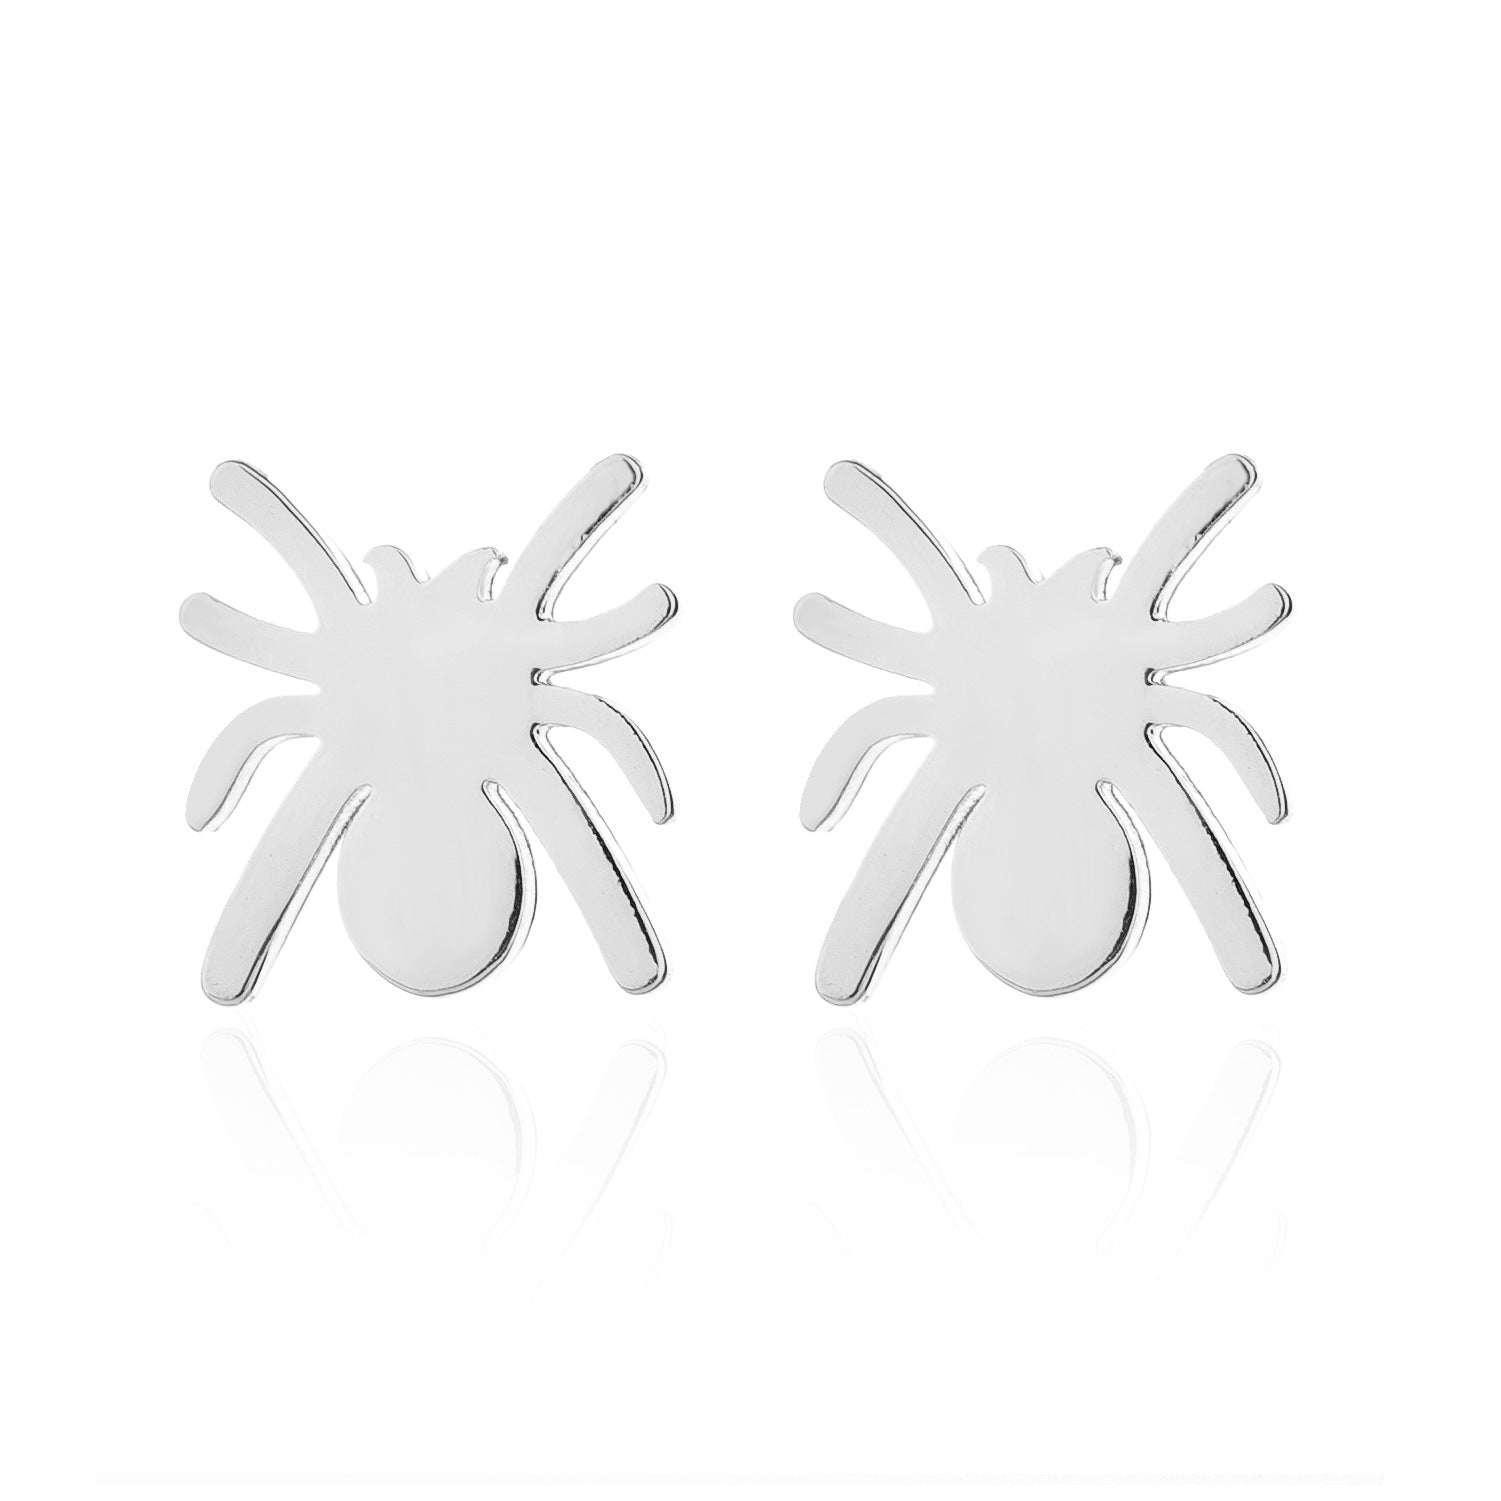 Spider Silver Stainless Steel Stud Earrings